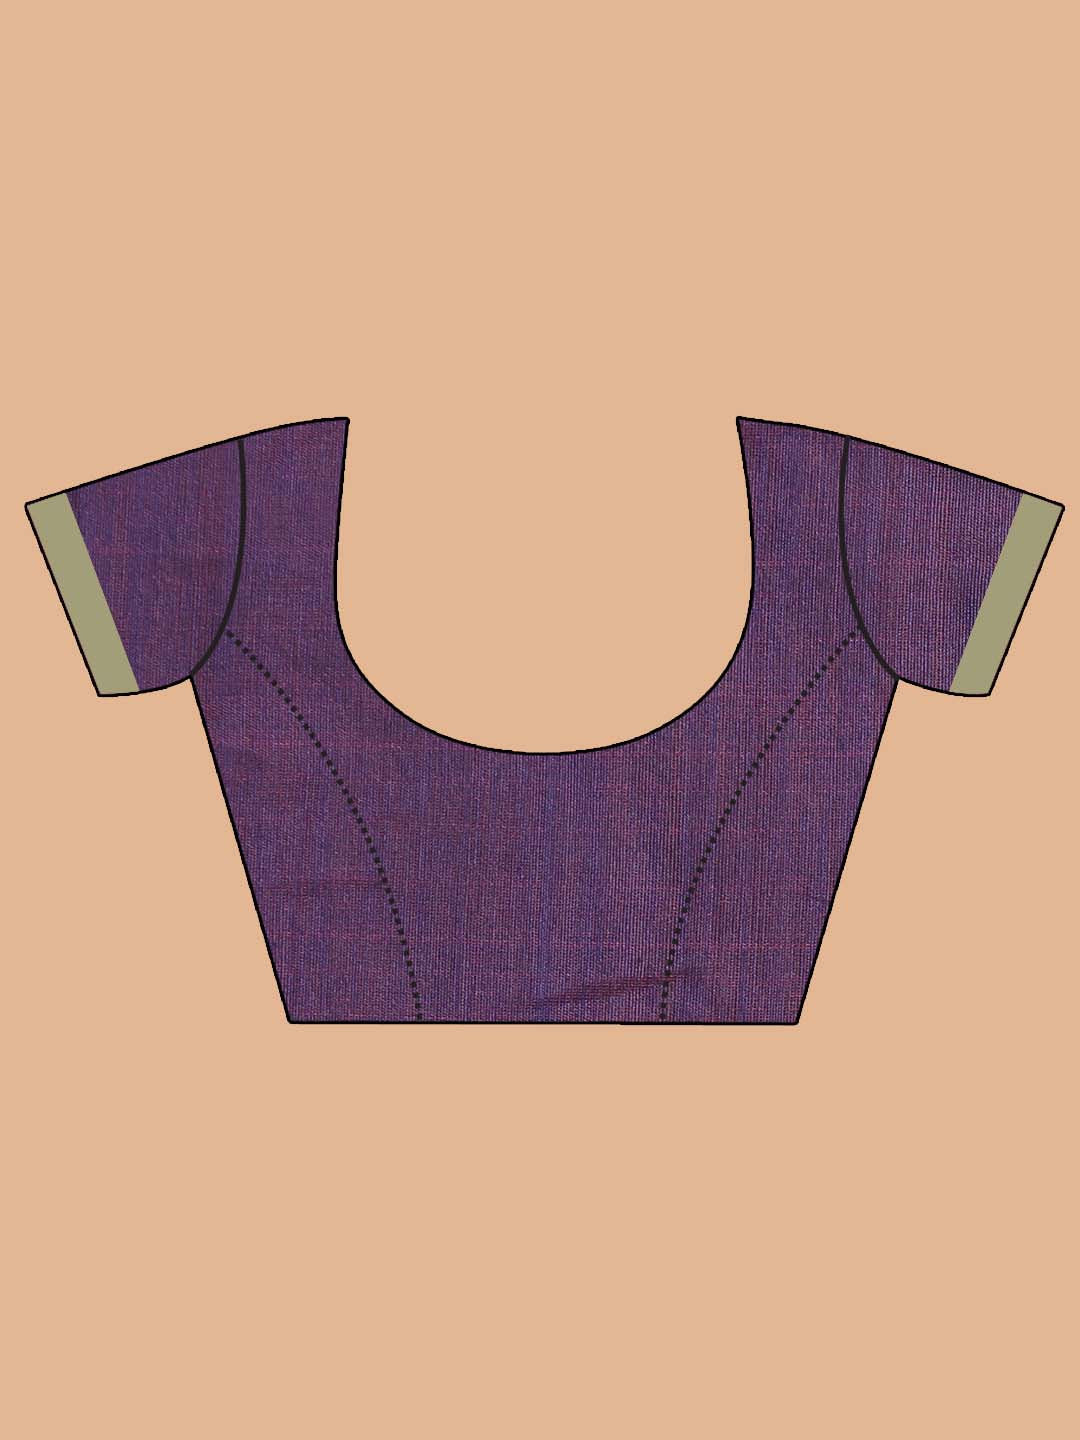 Indethnic Purple Bengal Handloom Cotton Blend Work Saree - Blouse Piece View